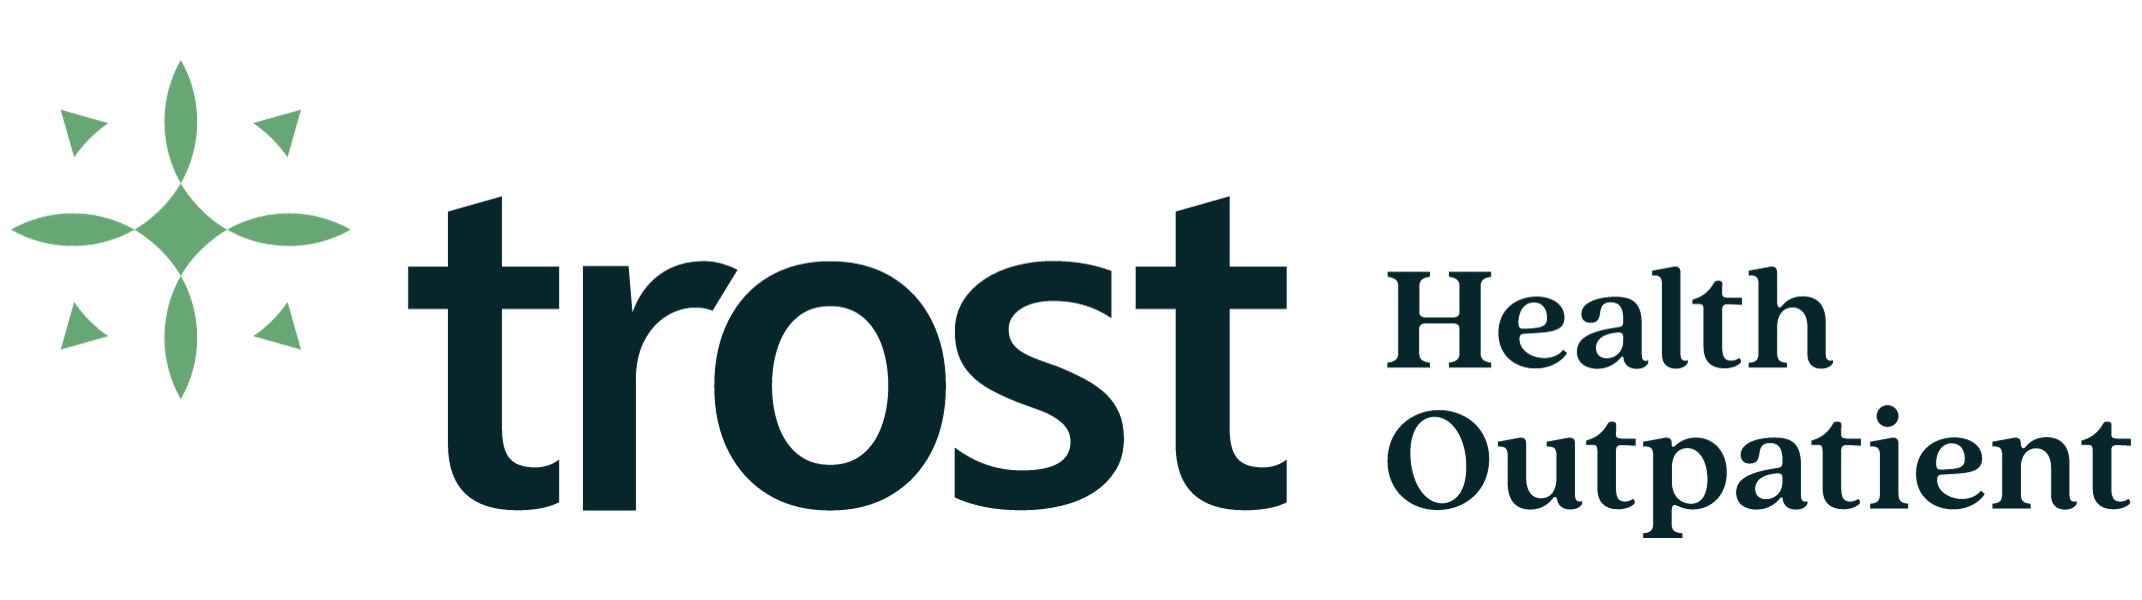 Trost-Health-Outpatient